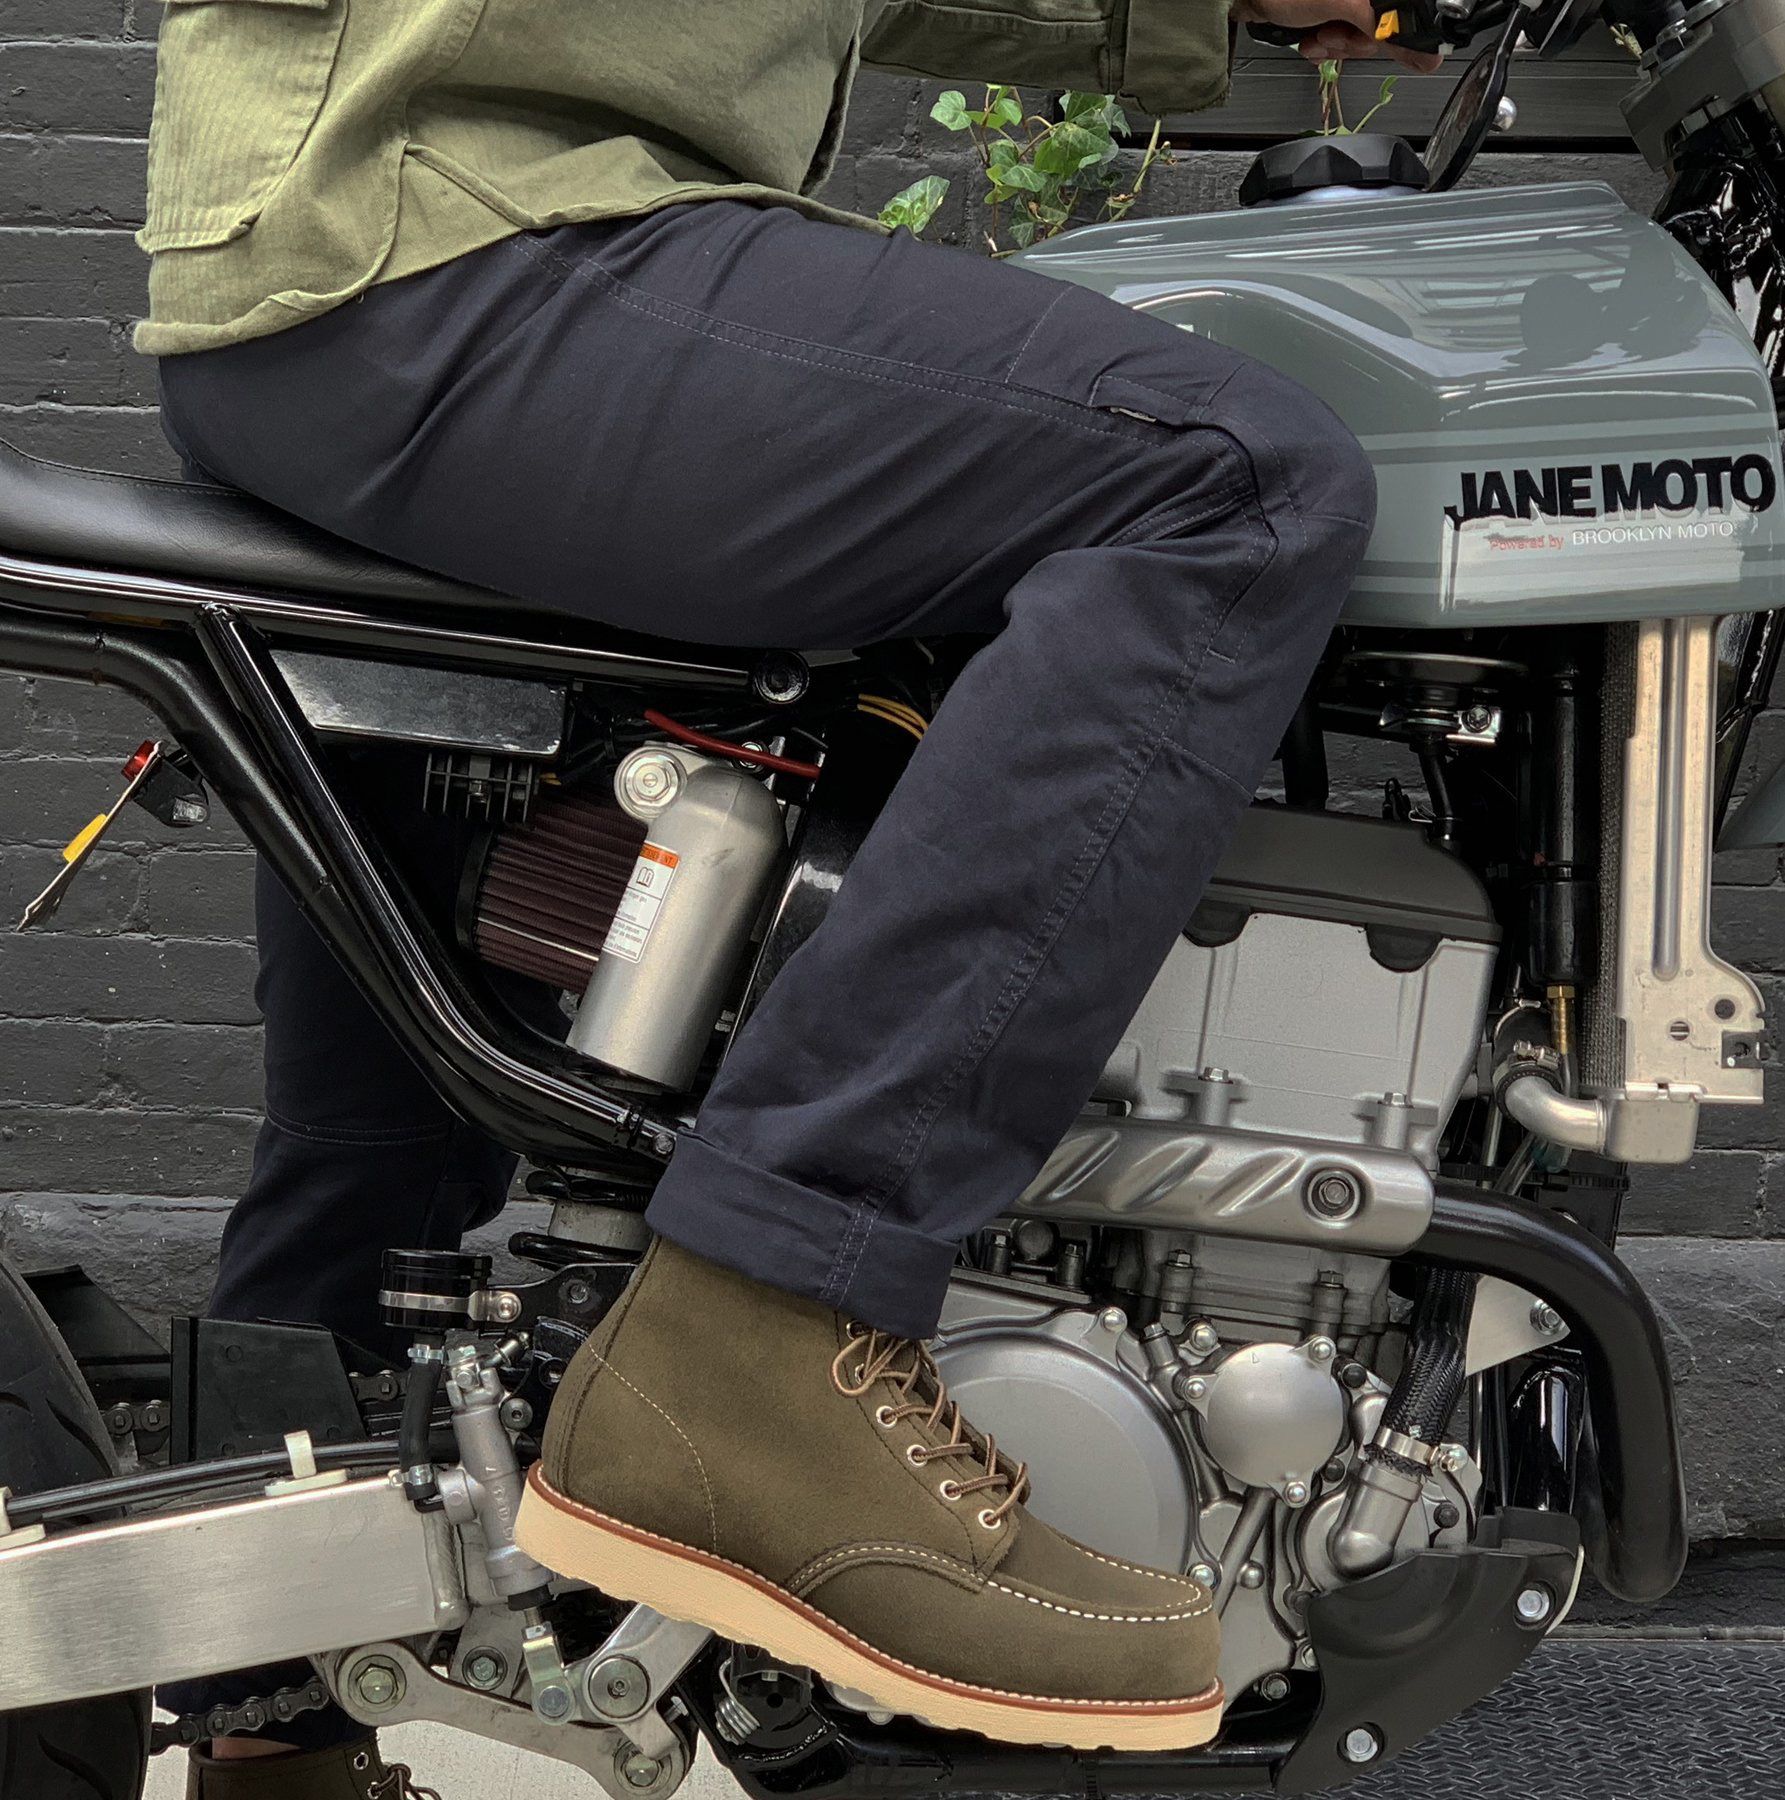 best motorcycle cargo pants